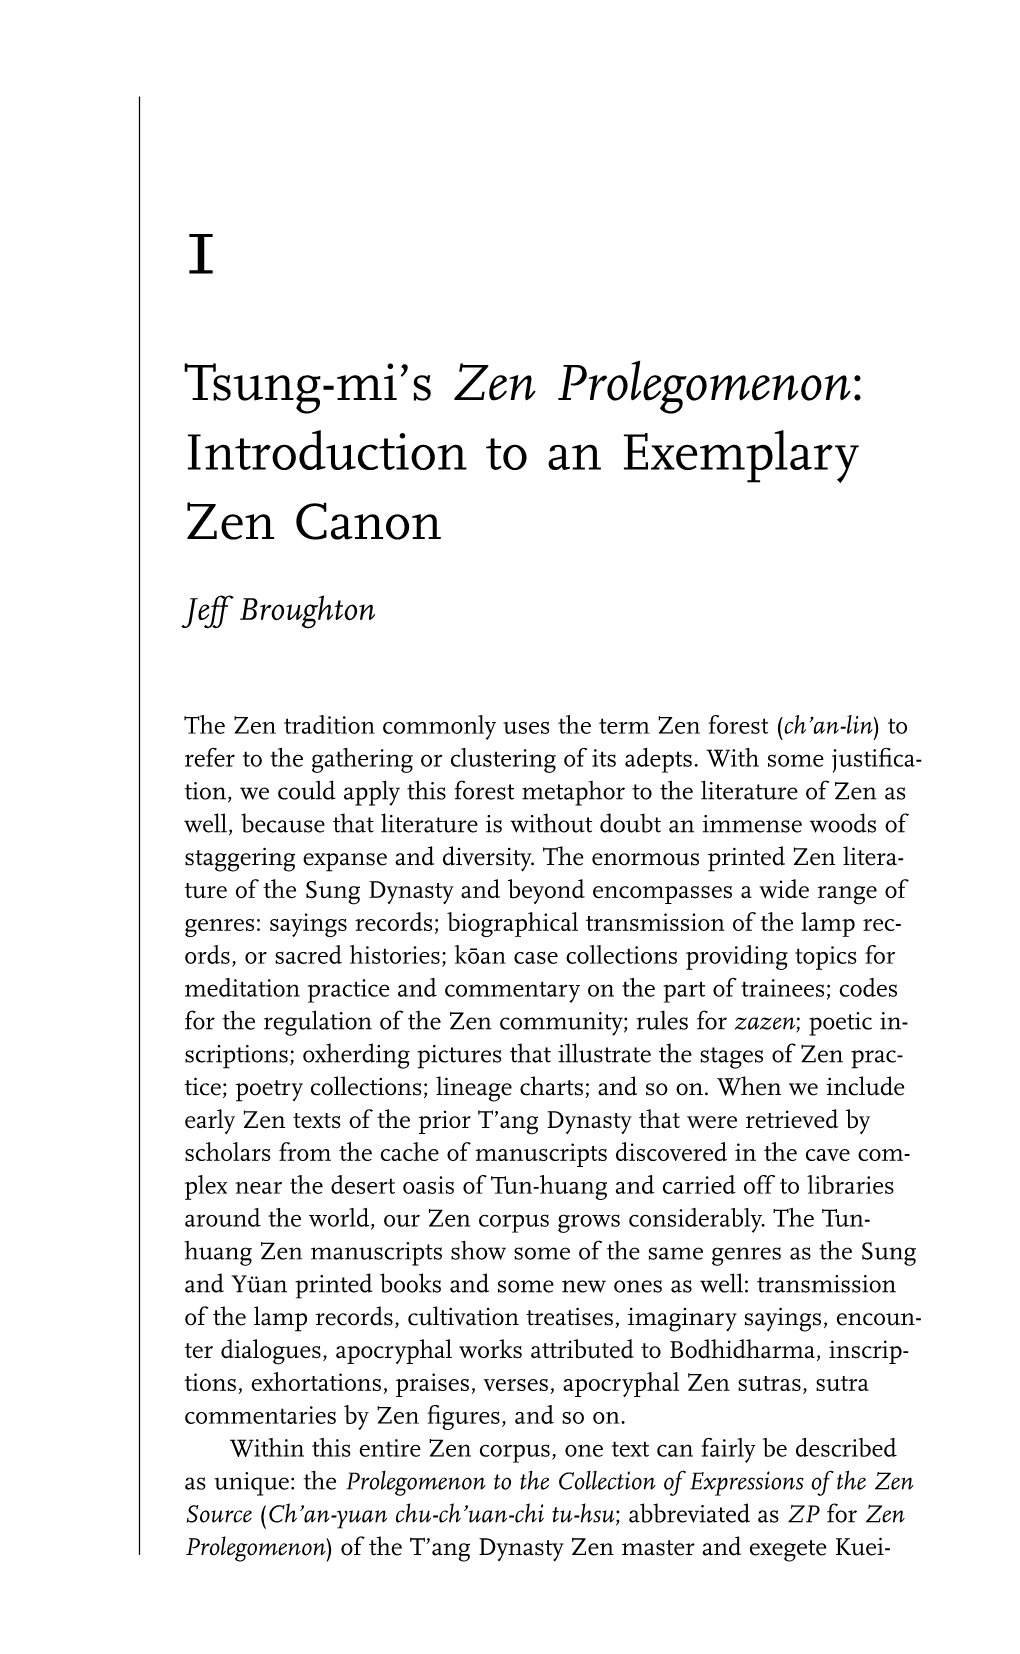 Tsung-Mi's Zen Prolegomenon: Introduction to an Exemplary Zen Canon